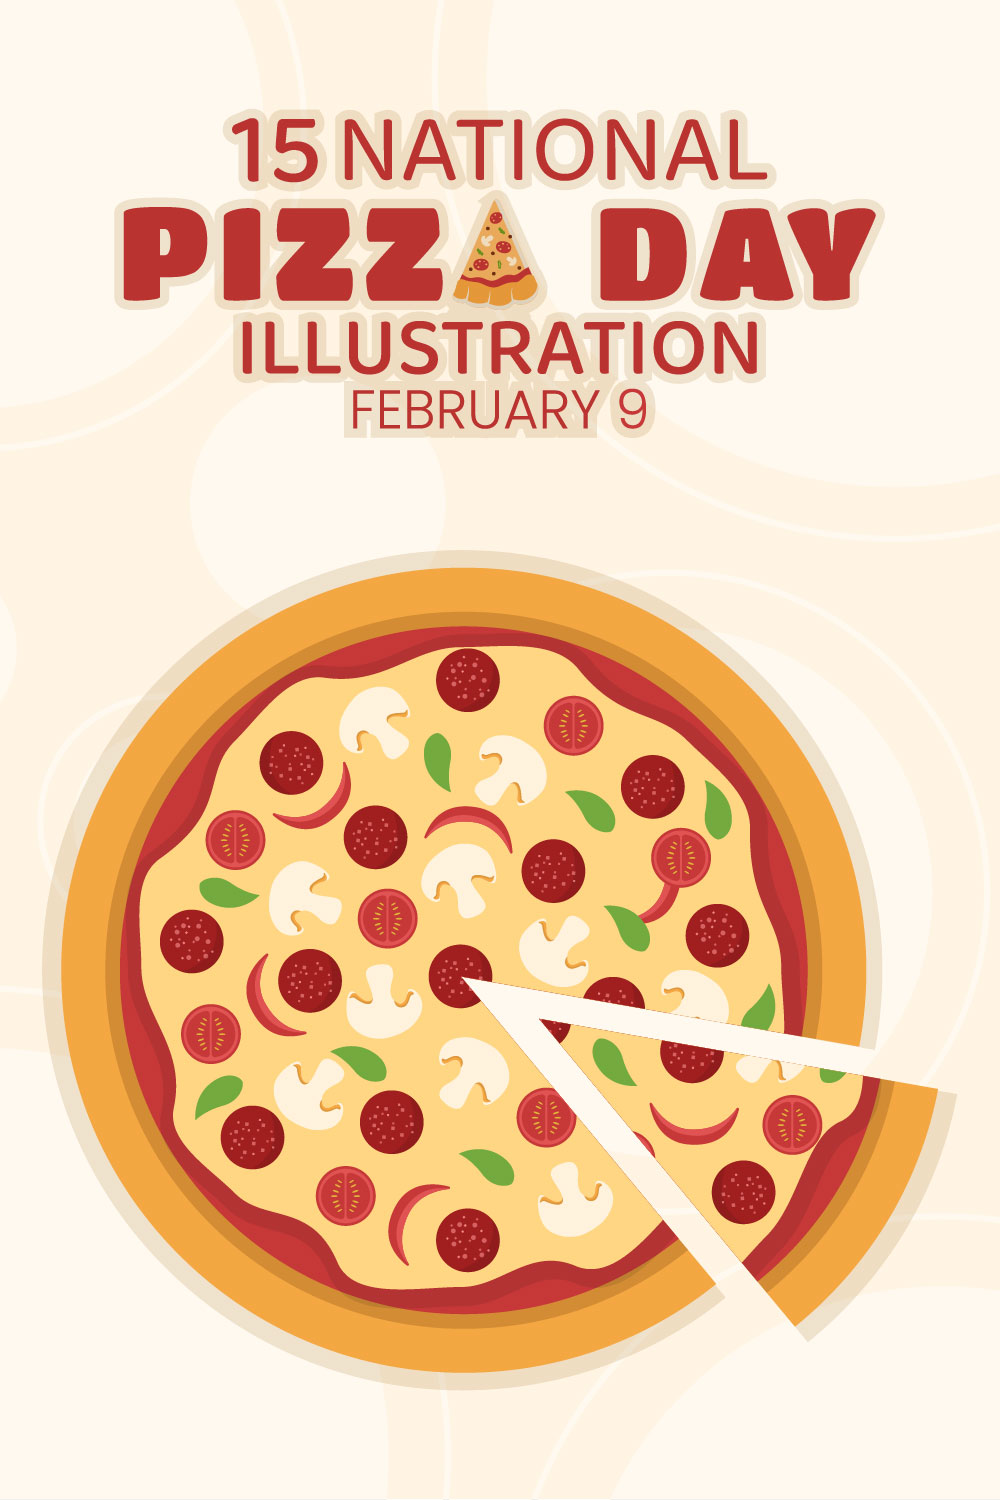 National Pizza Day Illustration pinterest image.